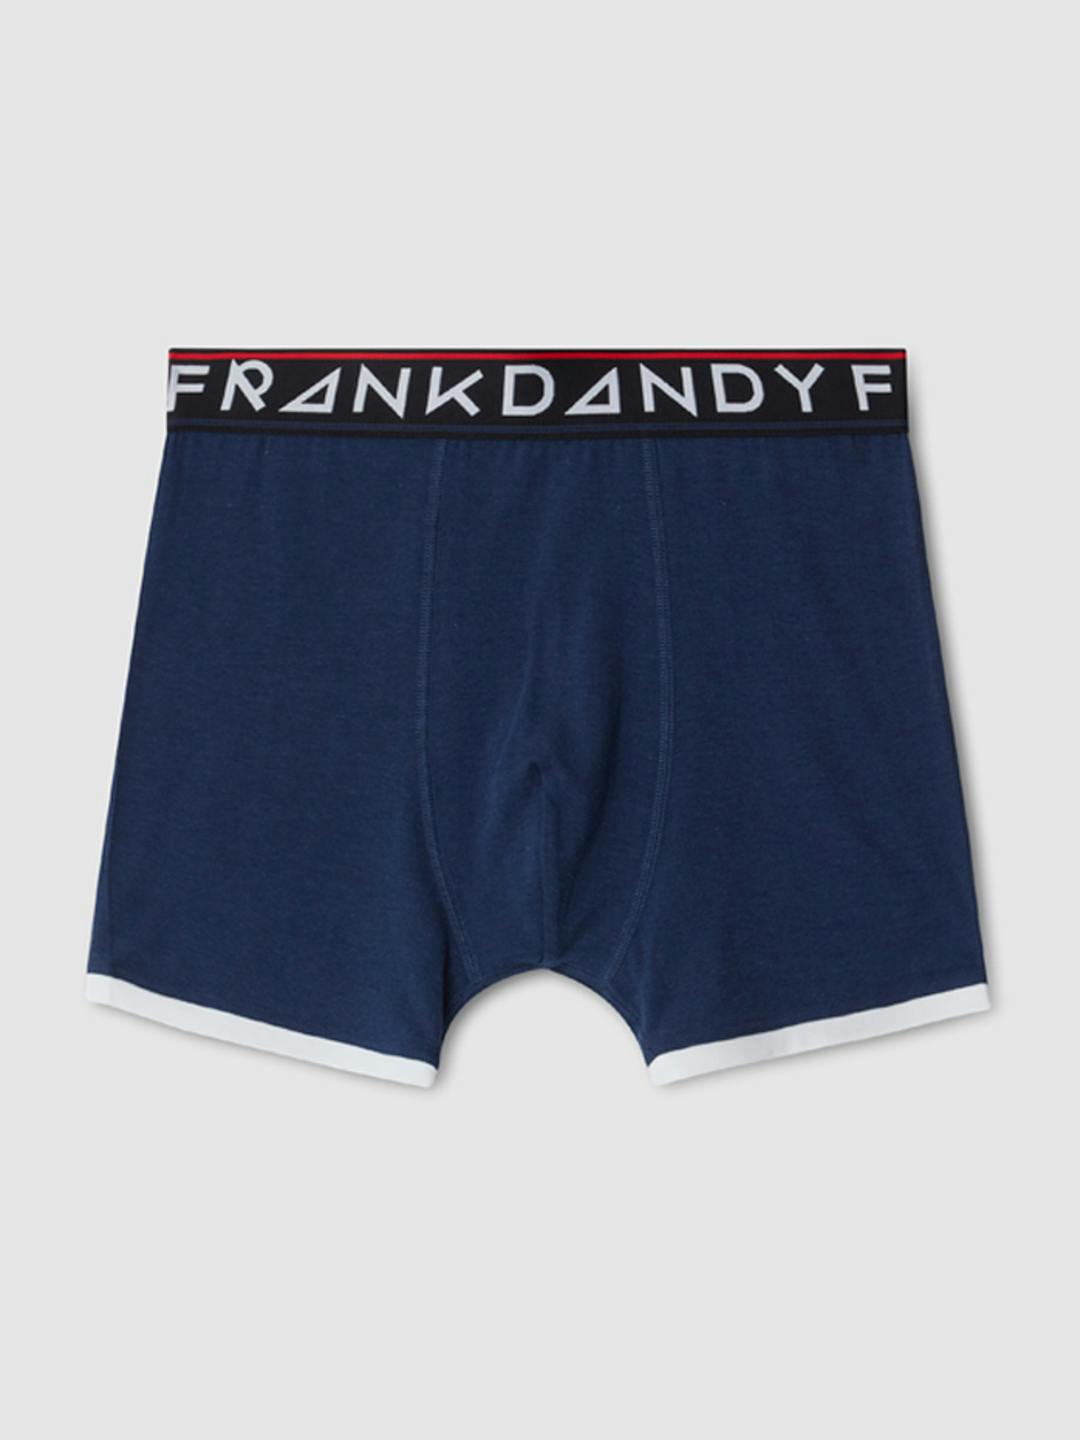 Solid Boxer - Black, Men's Underwear, Frank Dandy